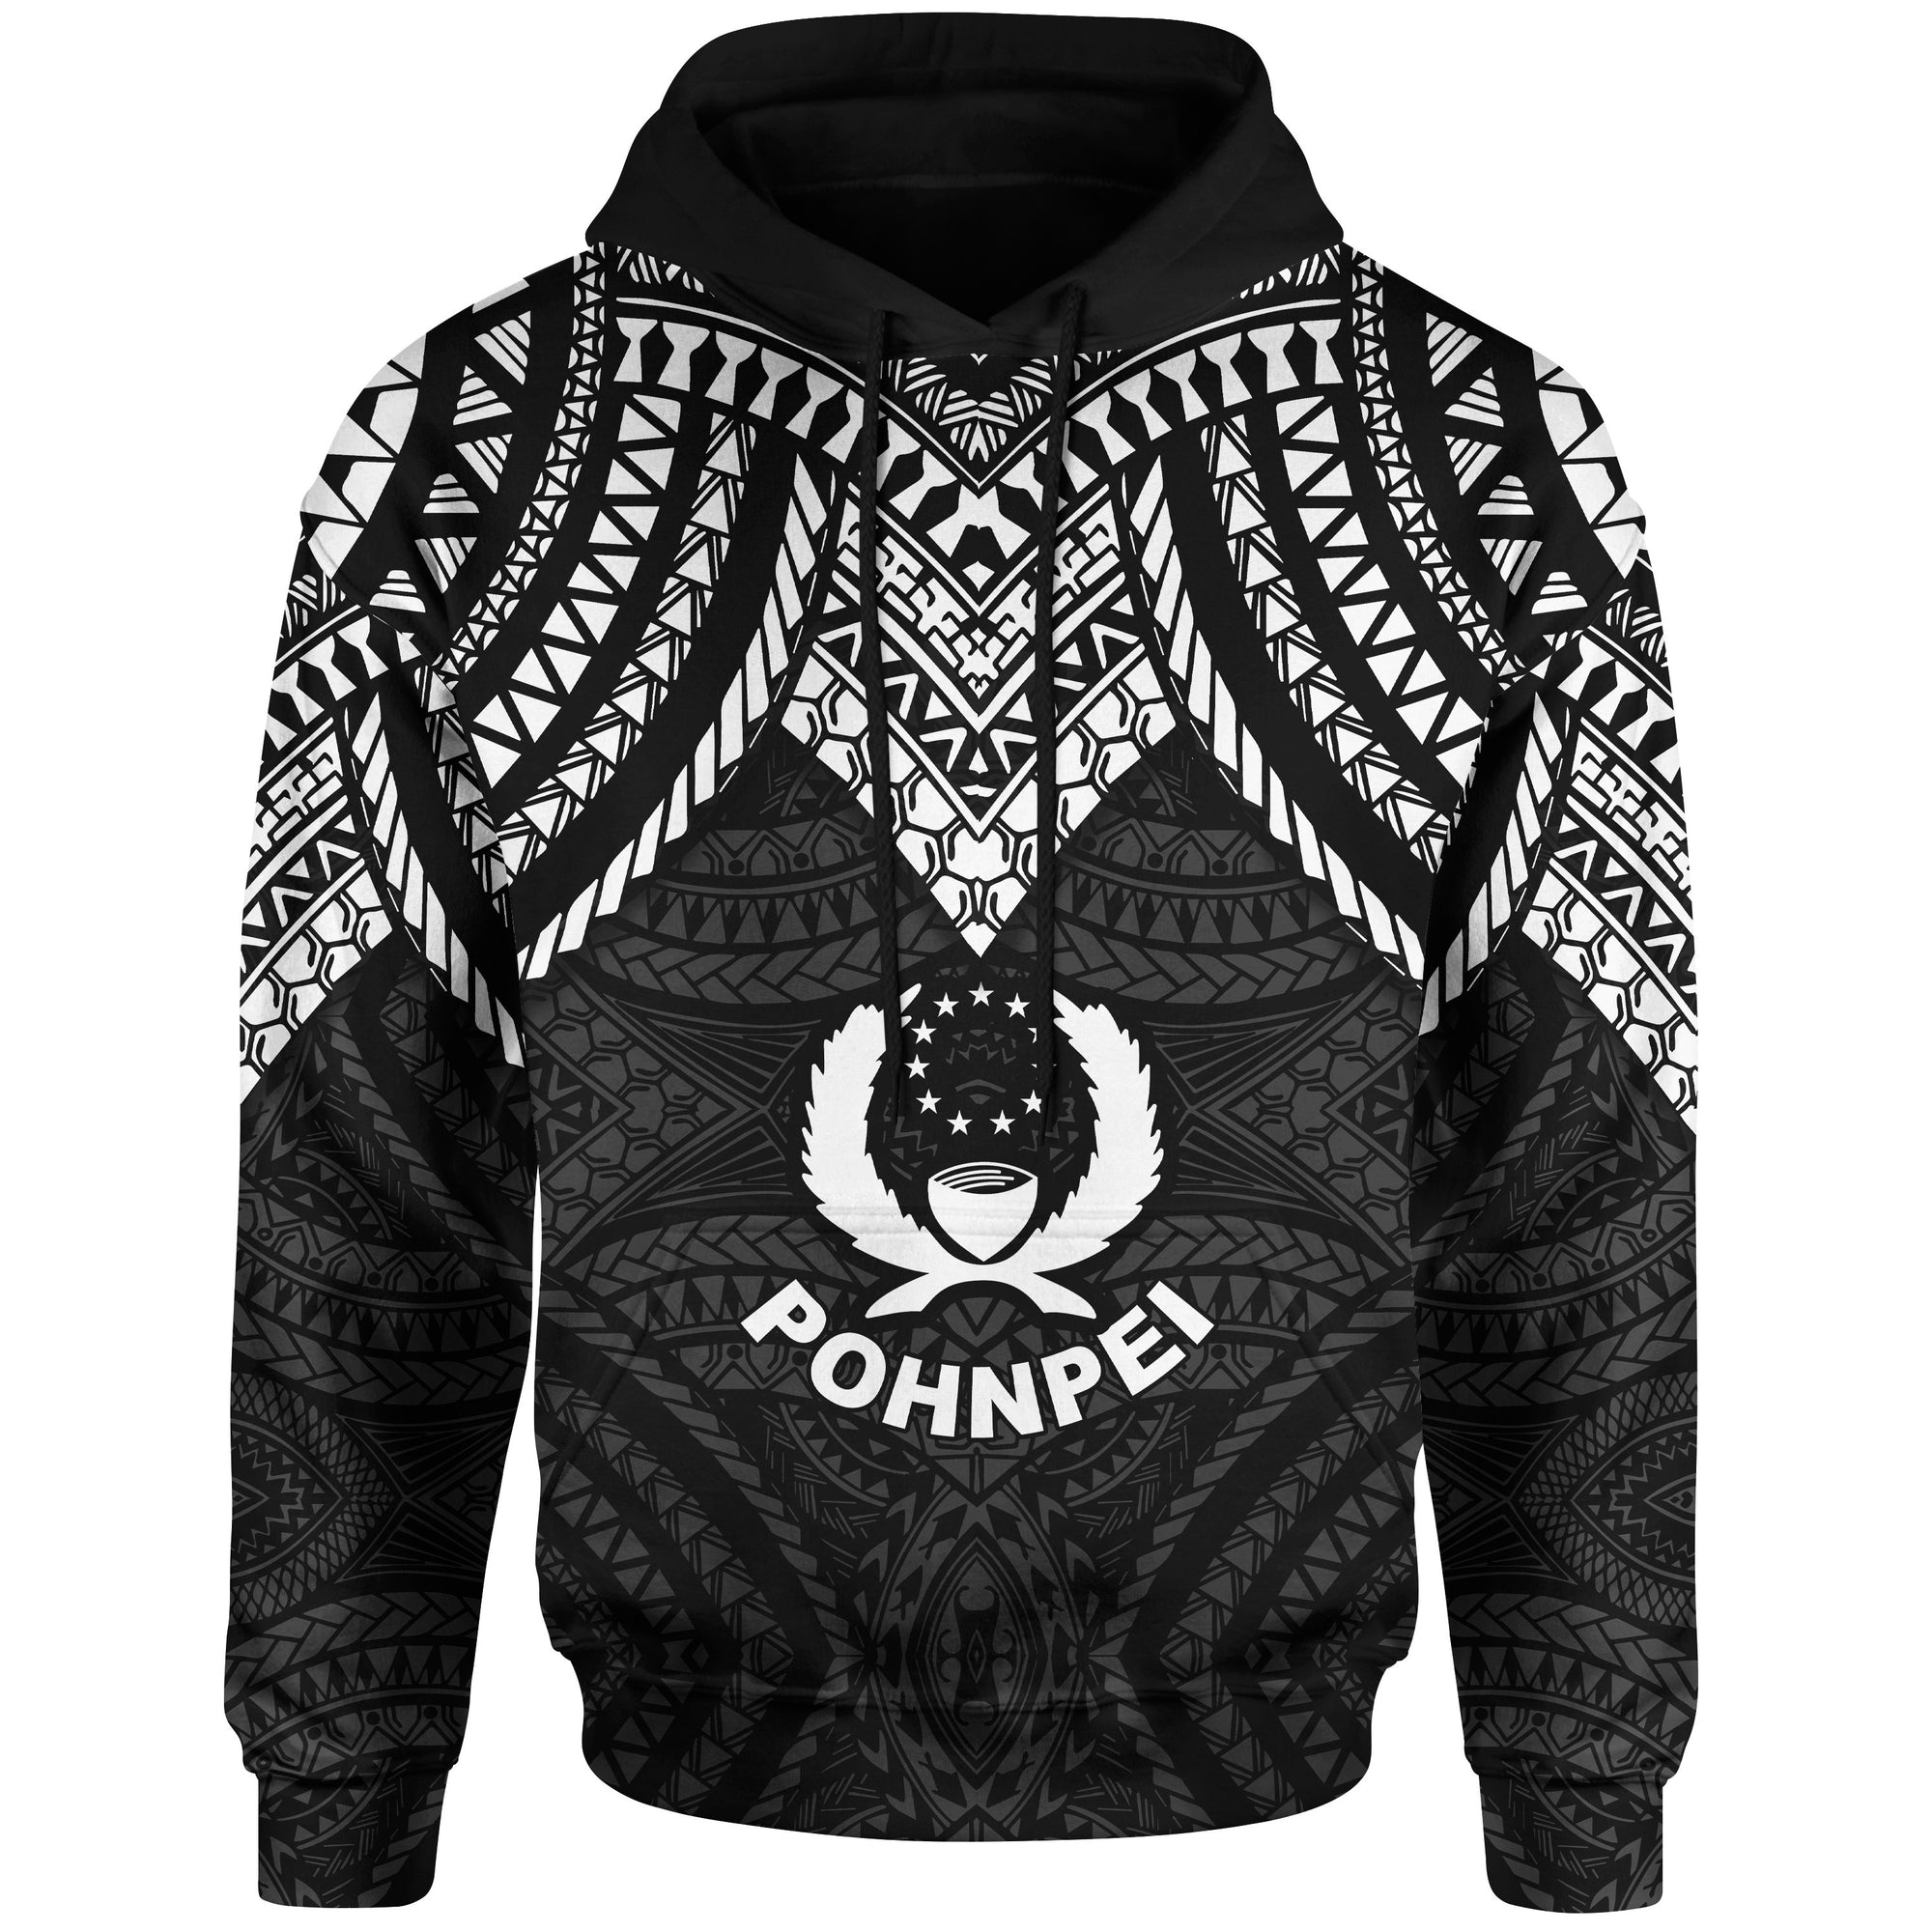 pohnpei-hoodie-micronesian-pattern-armor-style